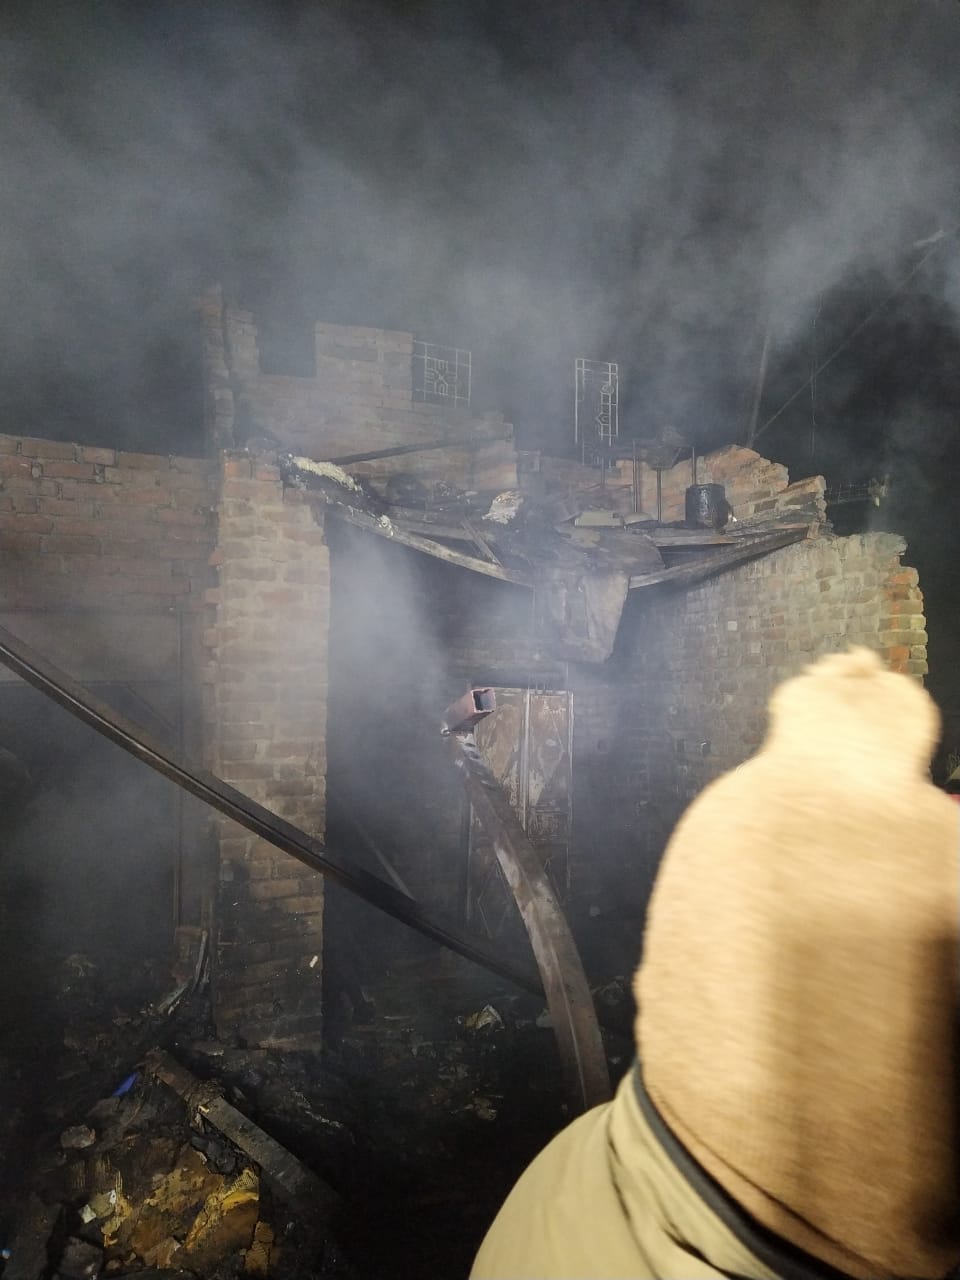 Fire in a junk shop in Kirti Nagar area